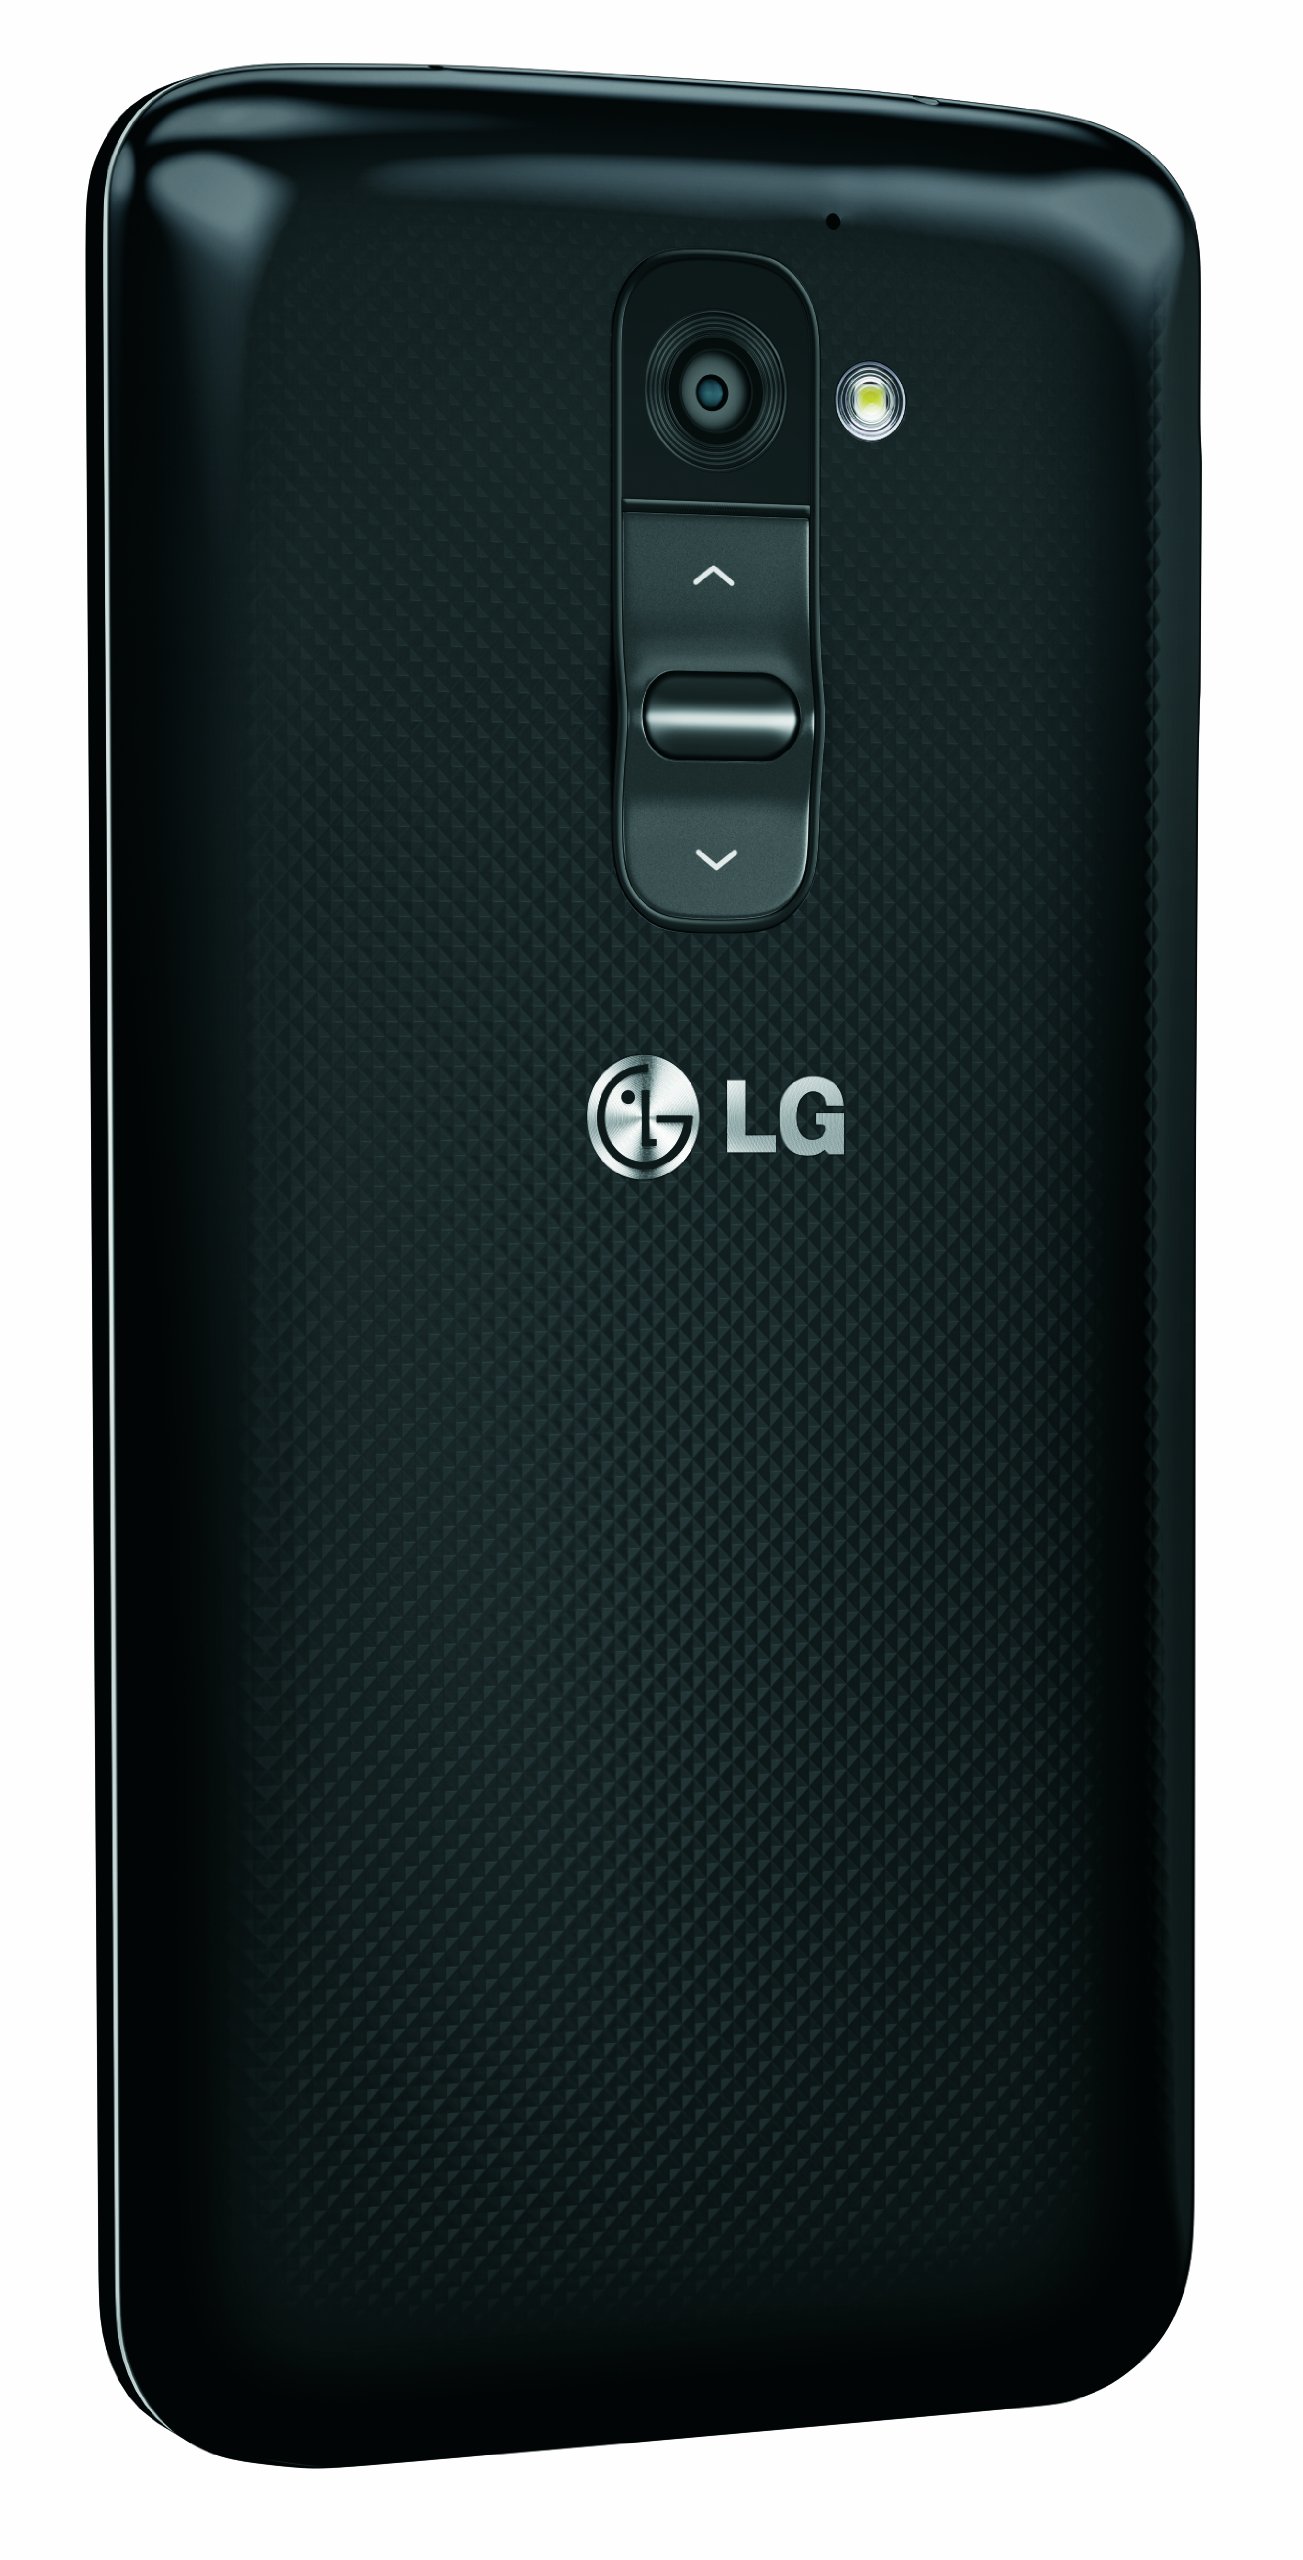 LG G2, Black 32GB (Sprint)